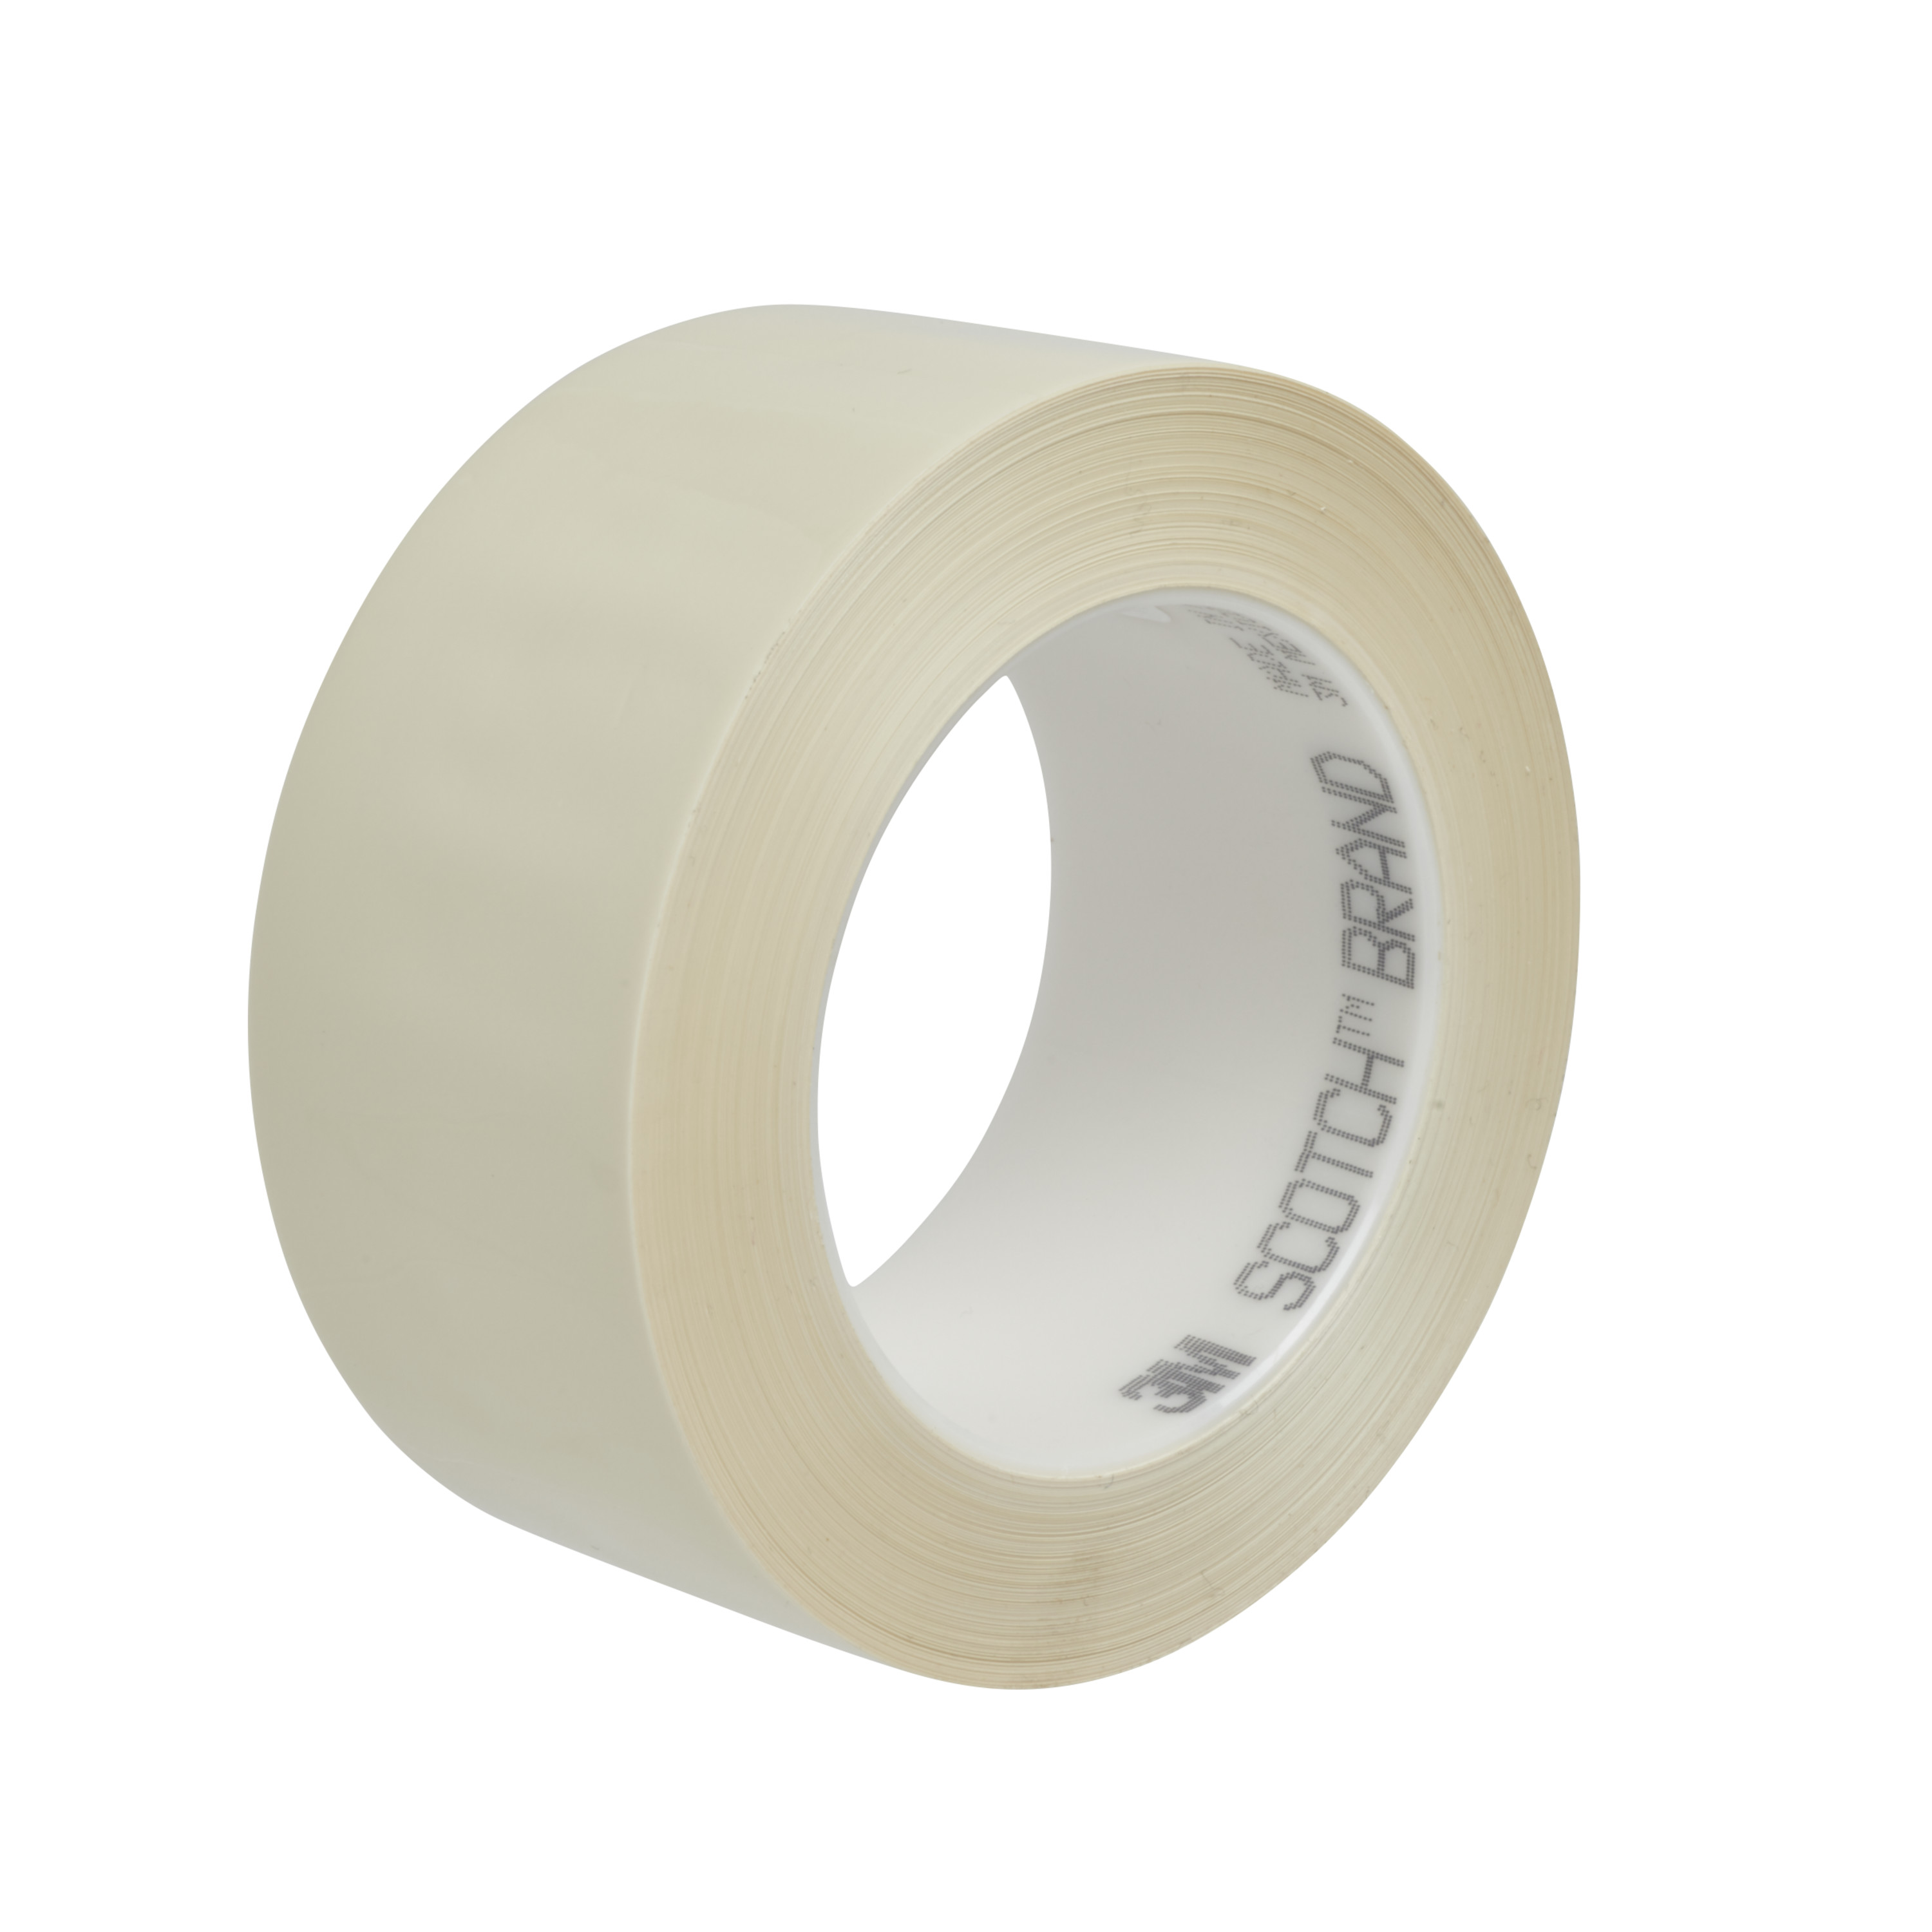 3M™ High Temperature Nylon Film Tape 855, White, 1/4 in x 72 yd, 3.6 mil, 144 rolls per case